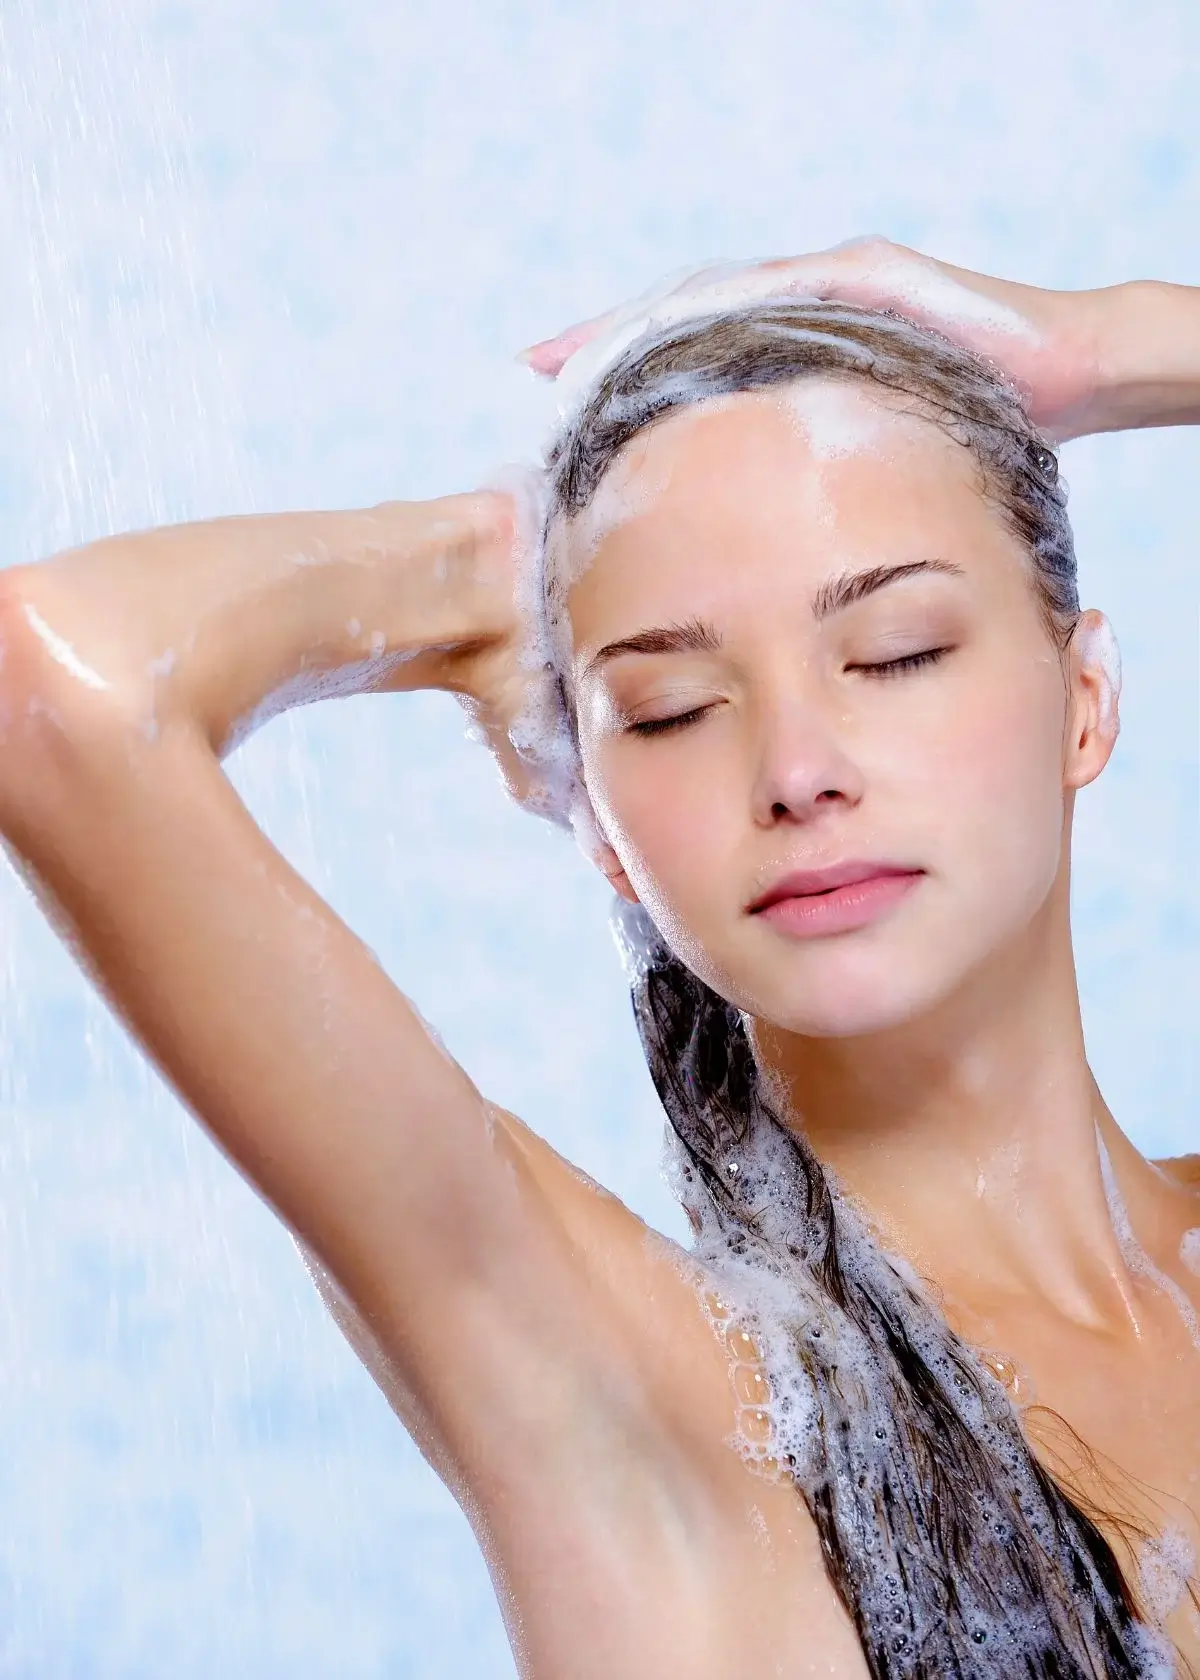 How does metal detox shampoo work?